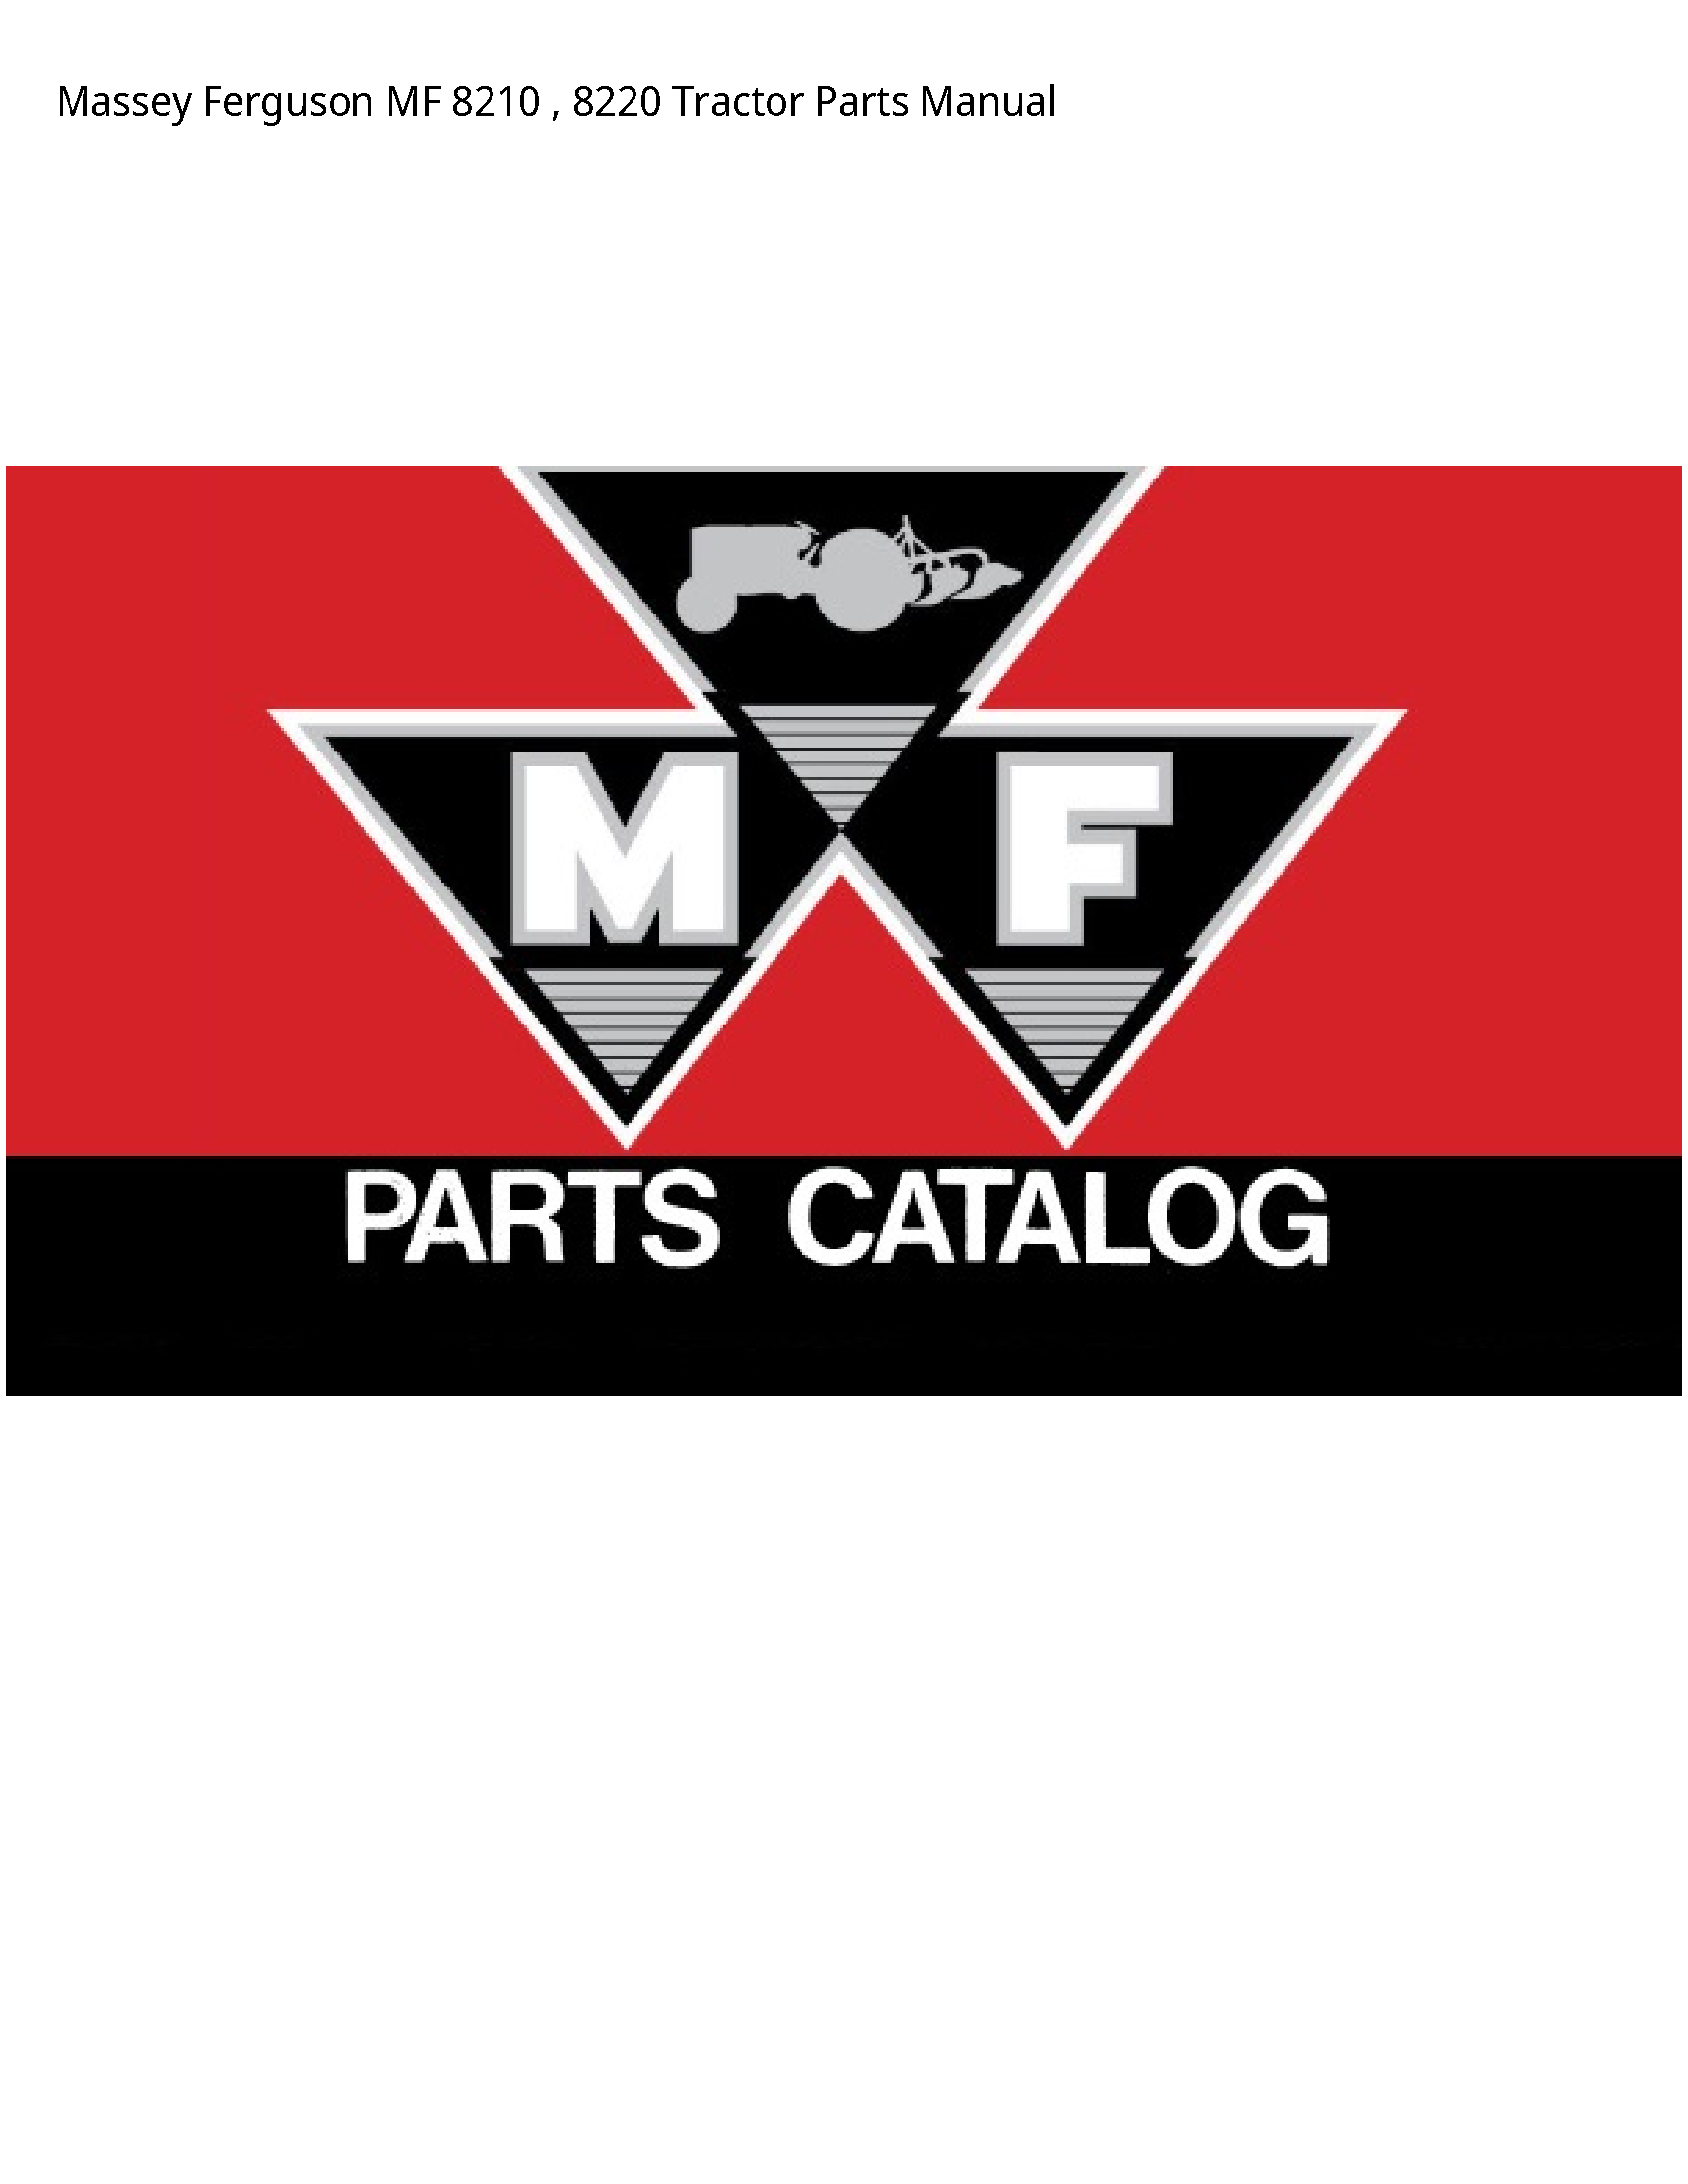 Massey Ferguson 8210 MF Tractor Parts manual